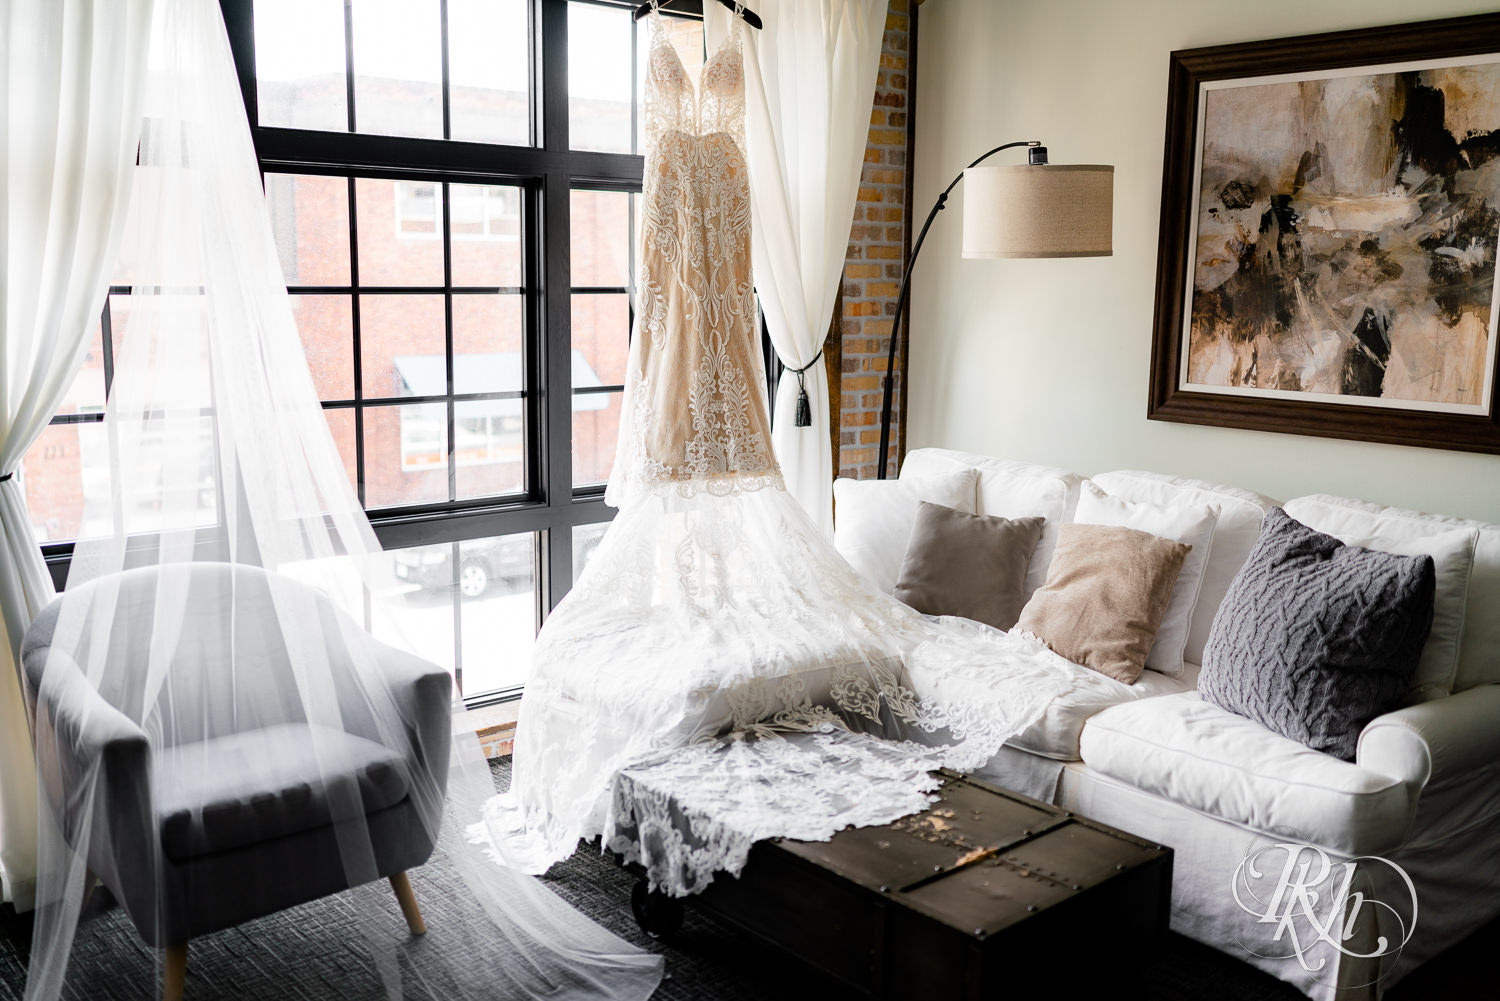 Wedding dress hanging in window at Hotel Crosby in Stillwater, Minnesota.